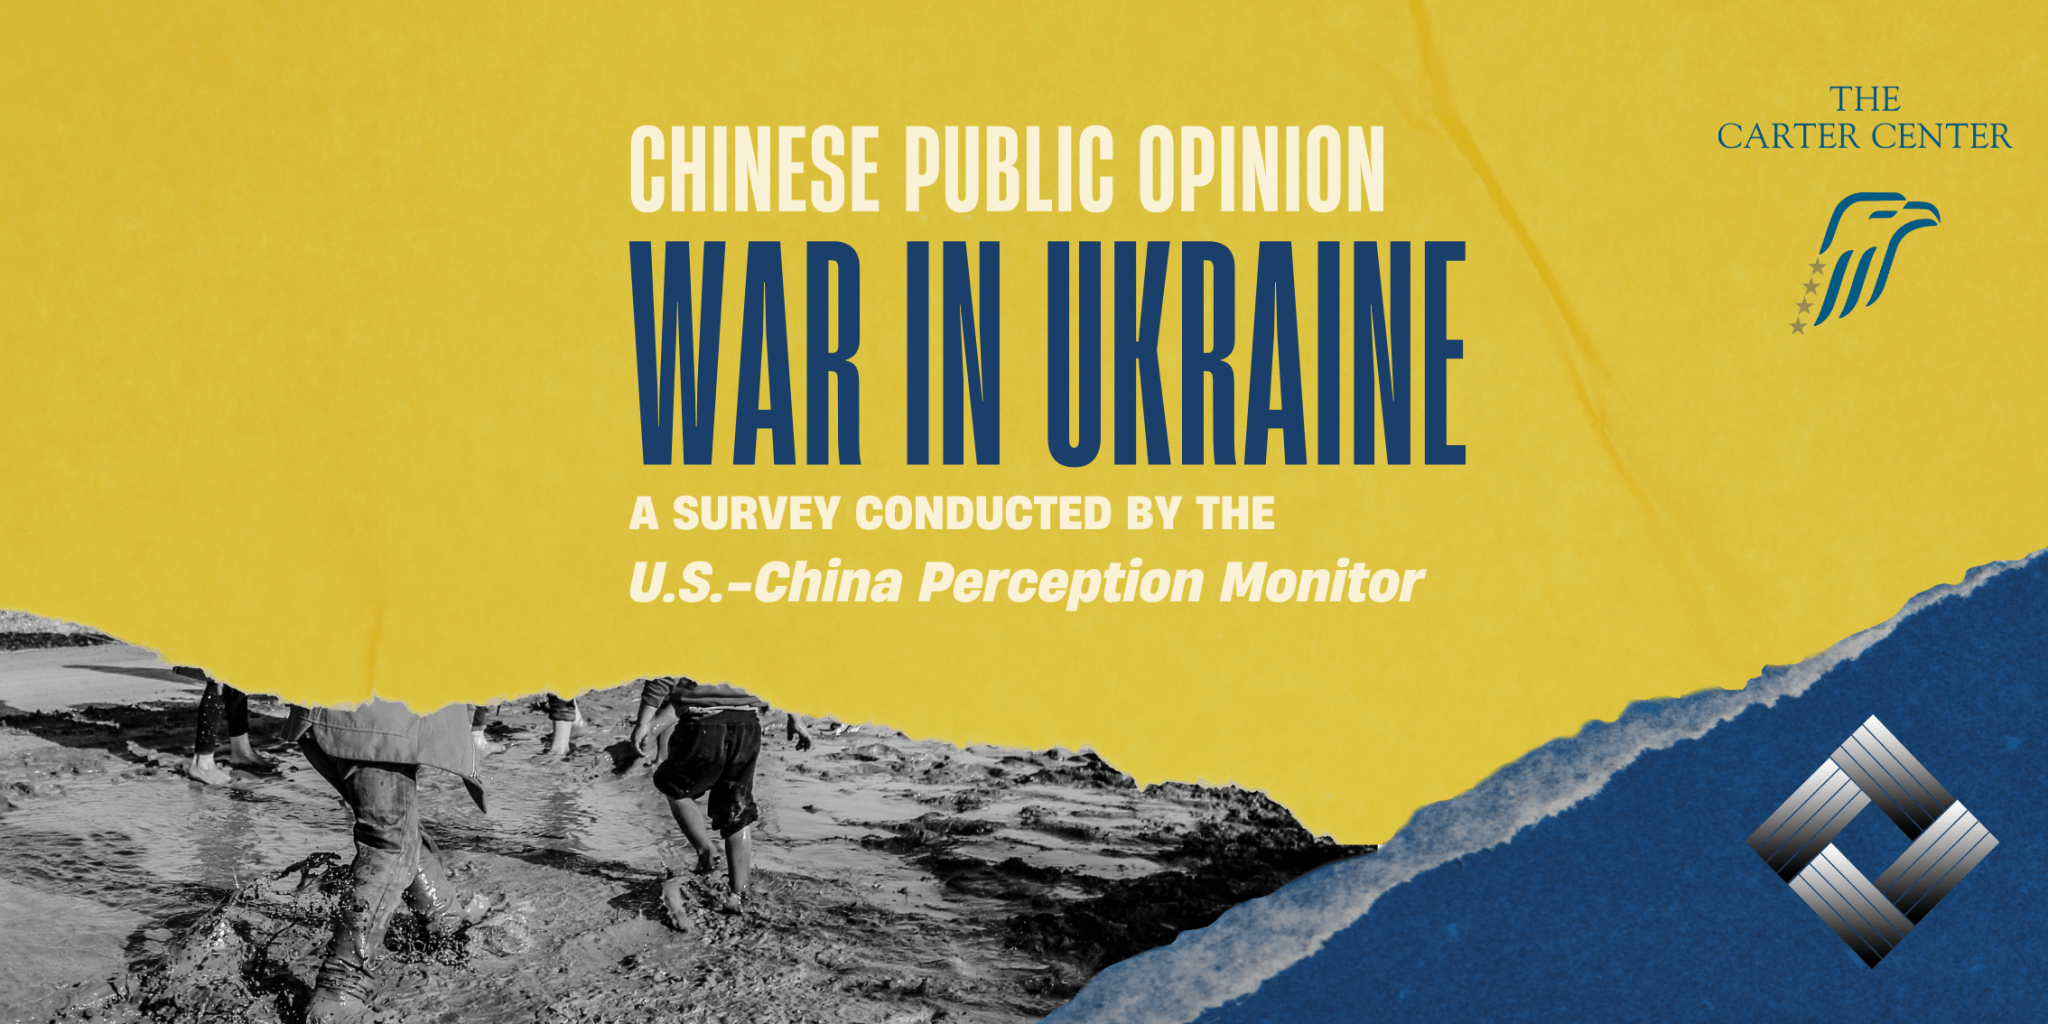 tcc-china-ukraine-survey-thumbnail21-1.png